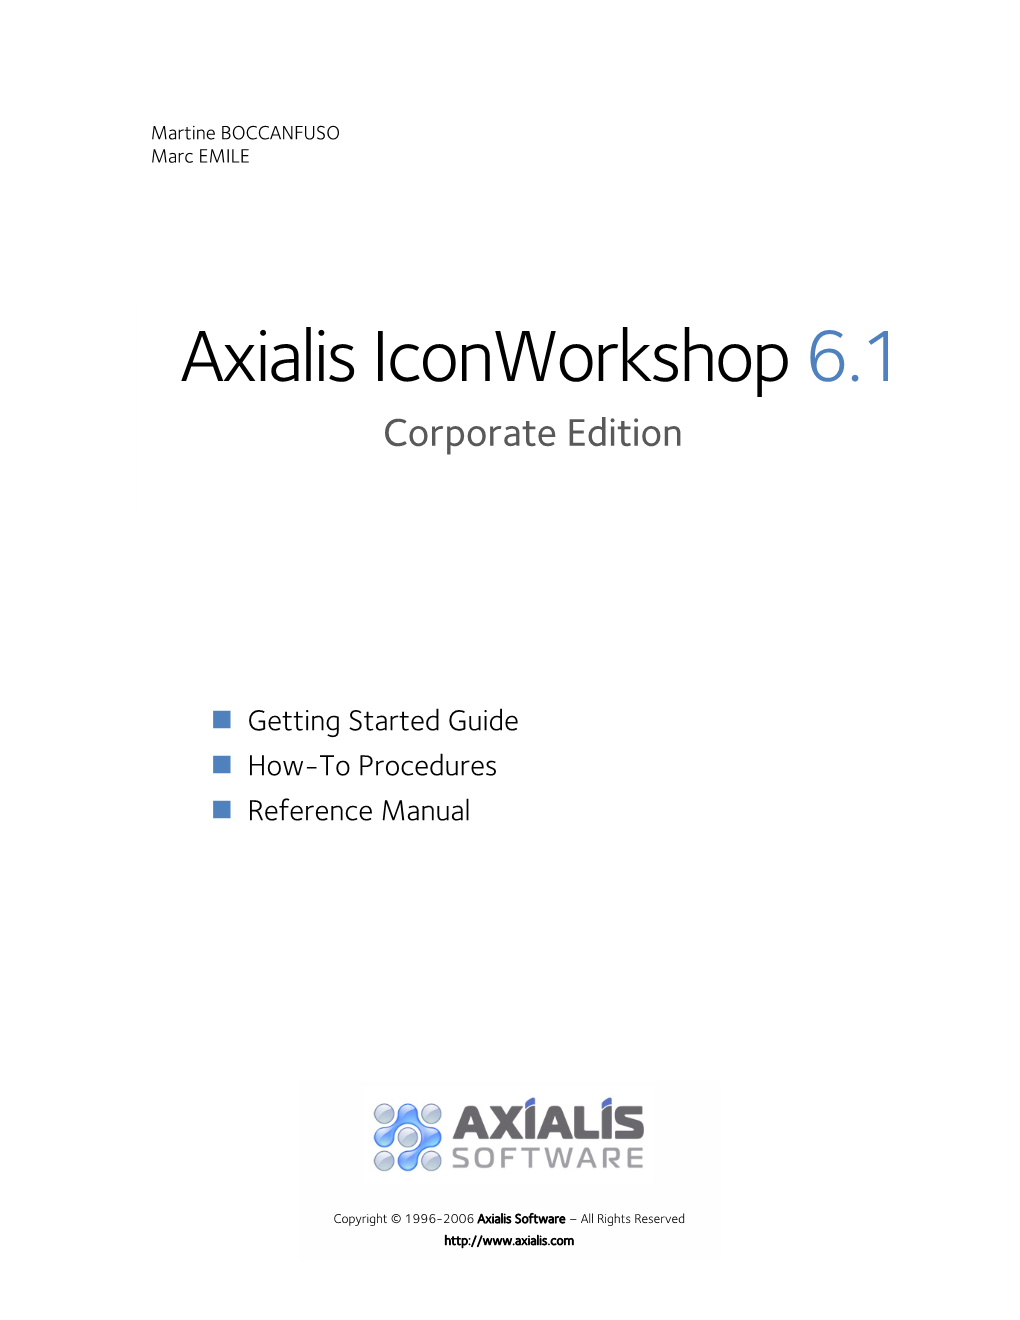 Axialis Iconworkshop 6.1